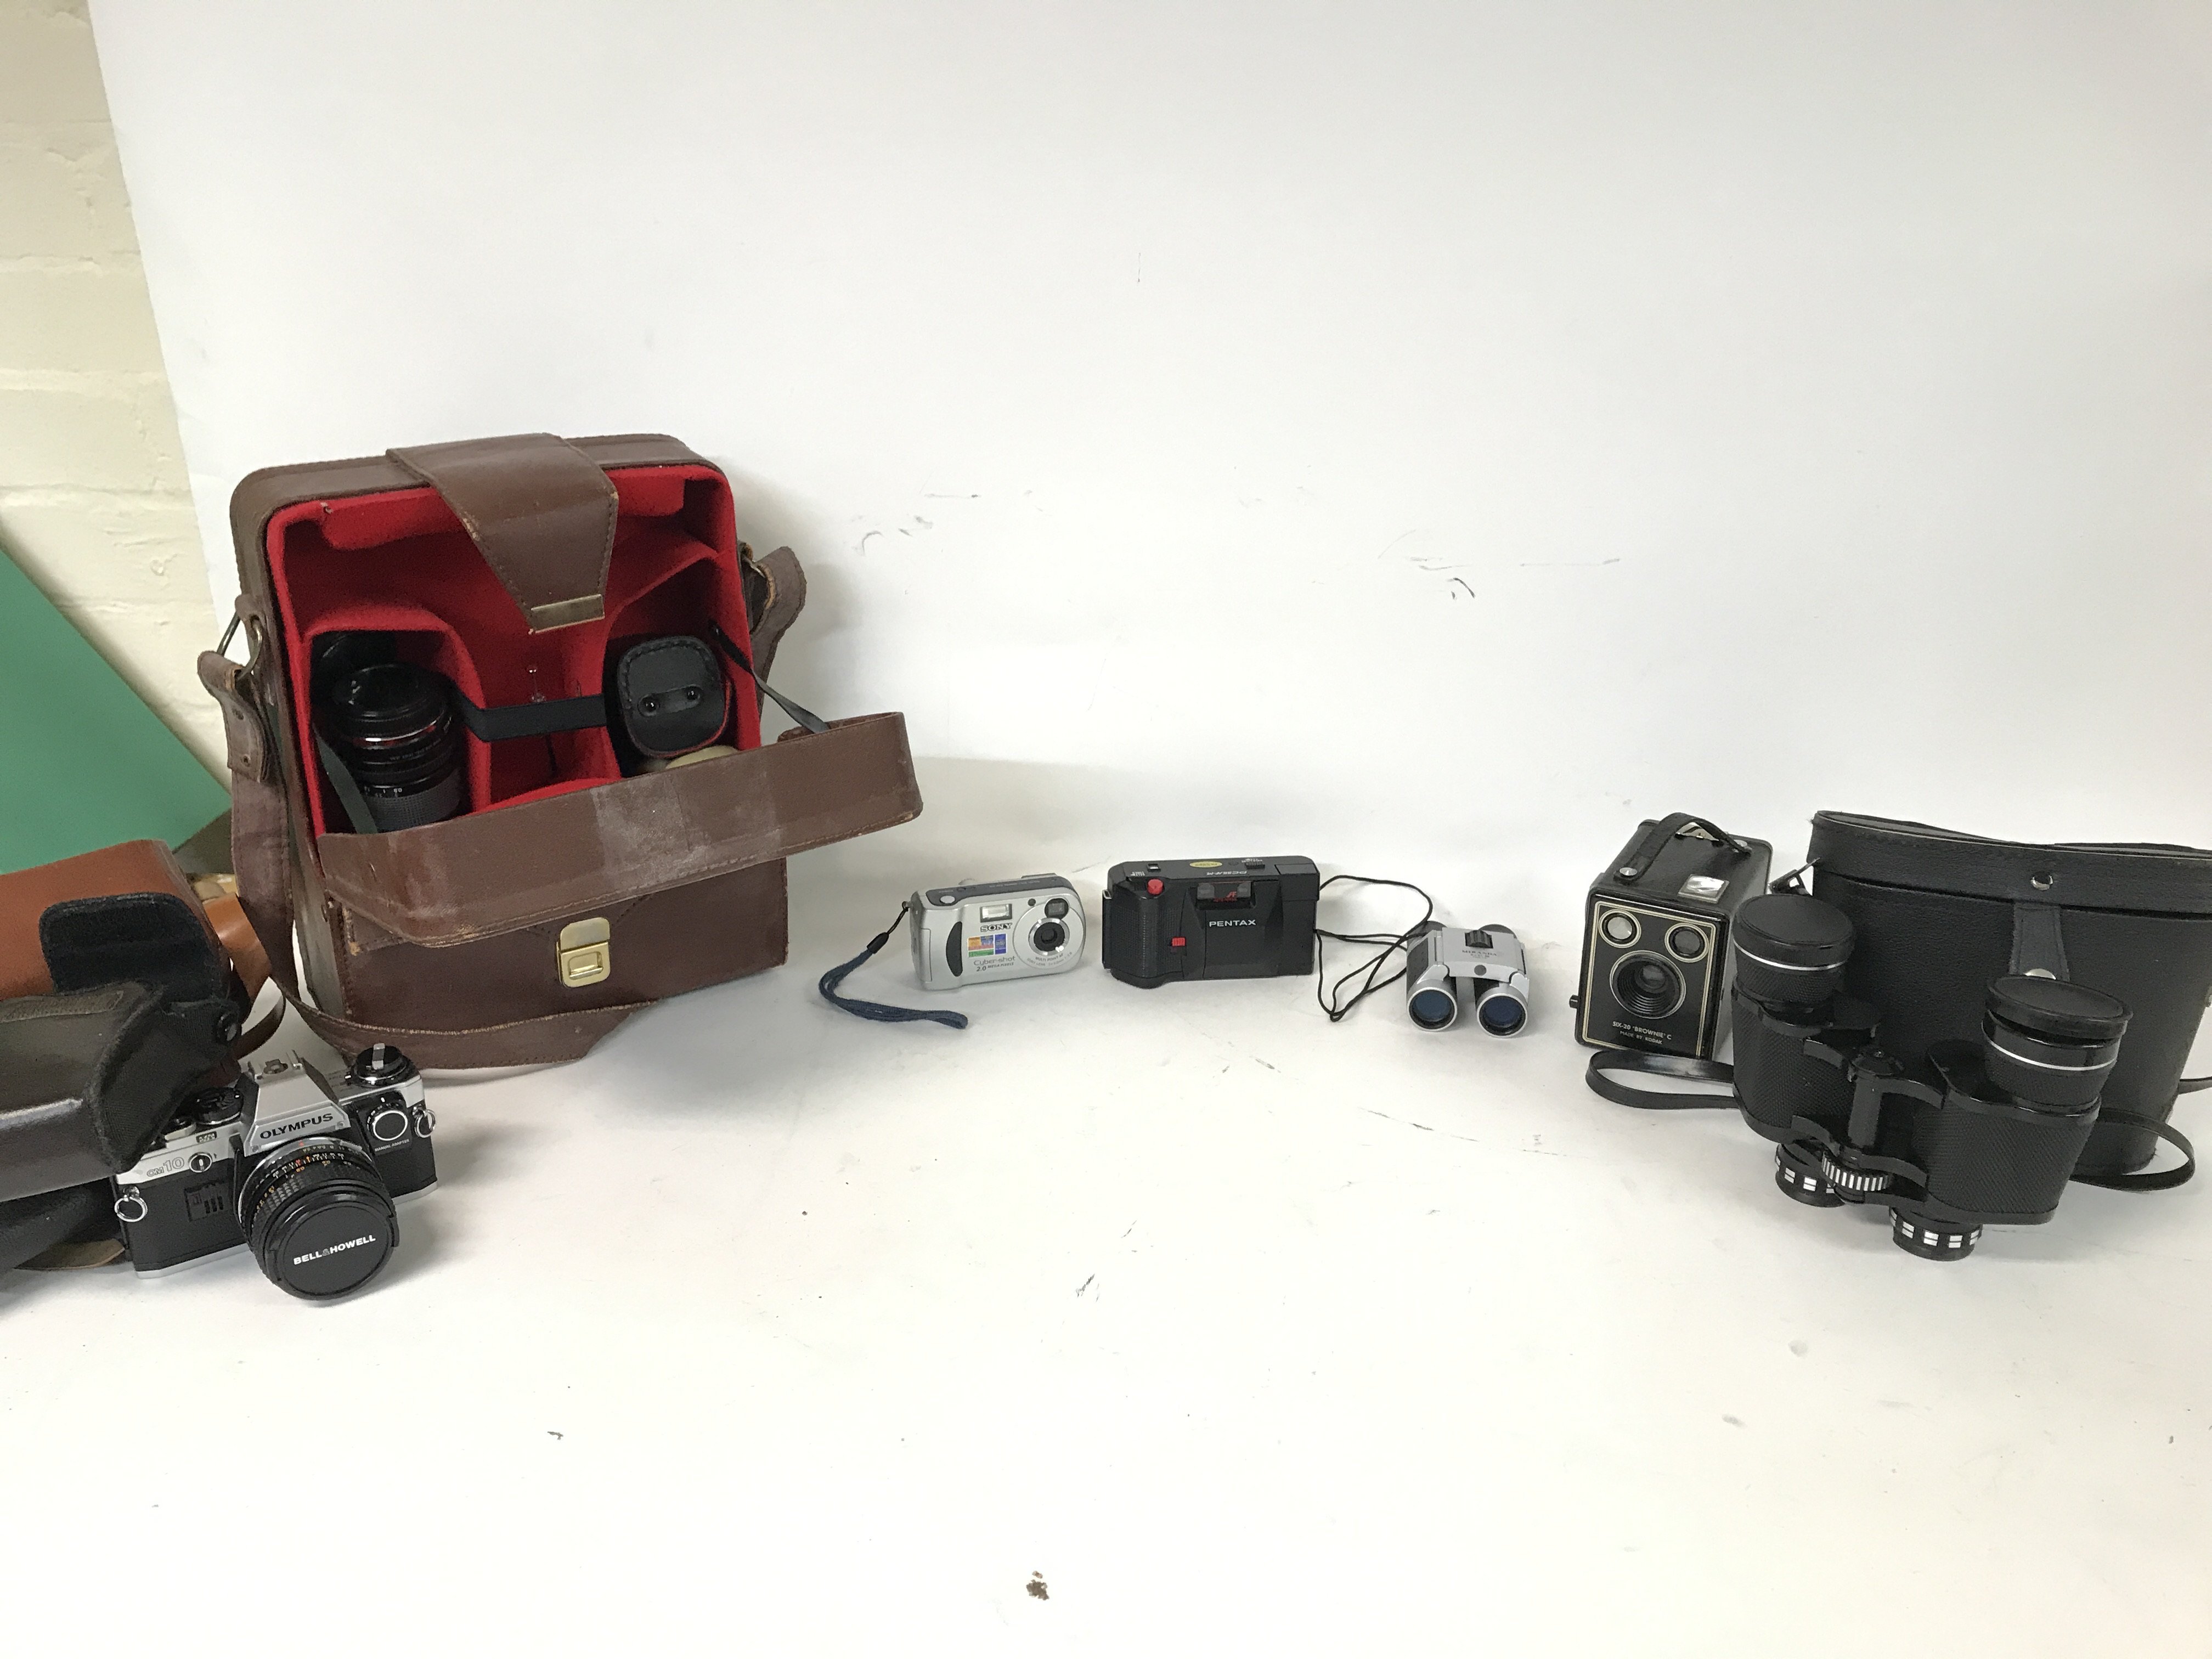 Cased cameras including an Olympus OM10, A Sony Cy